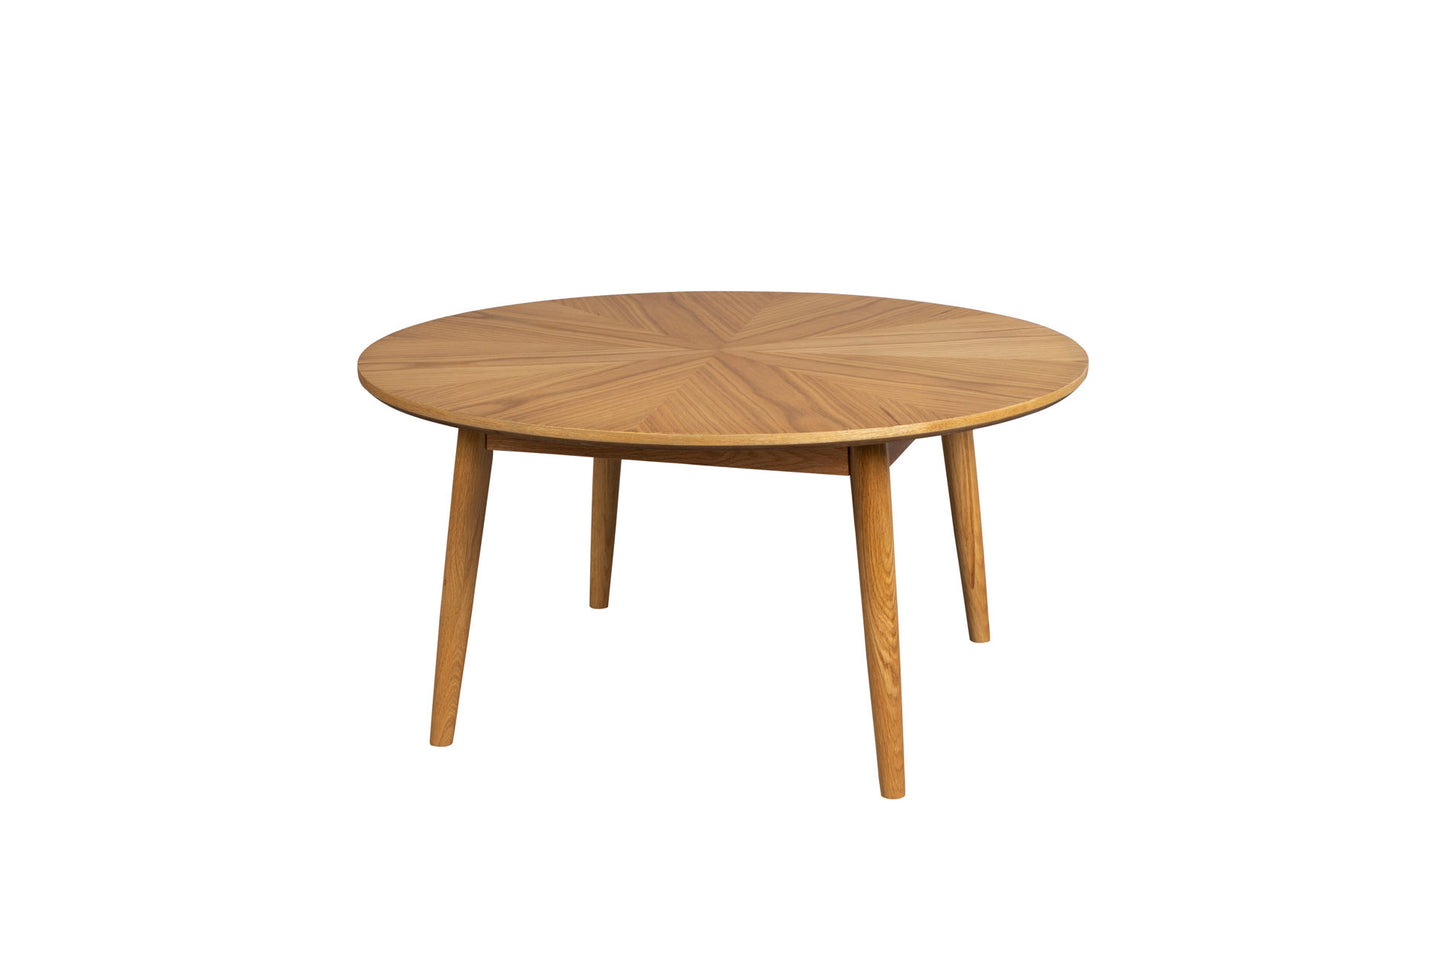 Nancy's Red Bank Coffee Table - Modern - Brown - Oak, Mdf - 80 cm x 80 cm x 40 cm